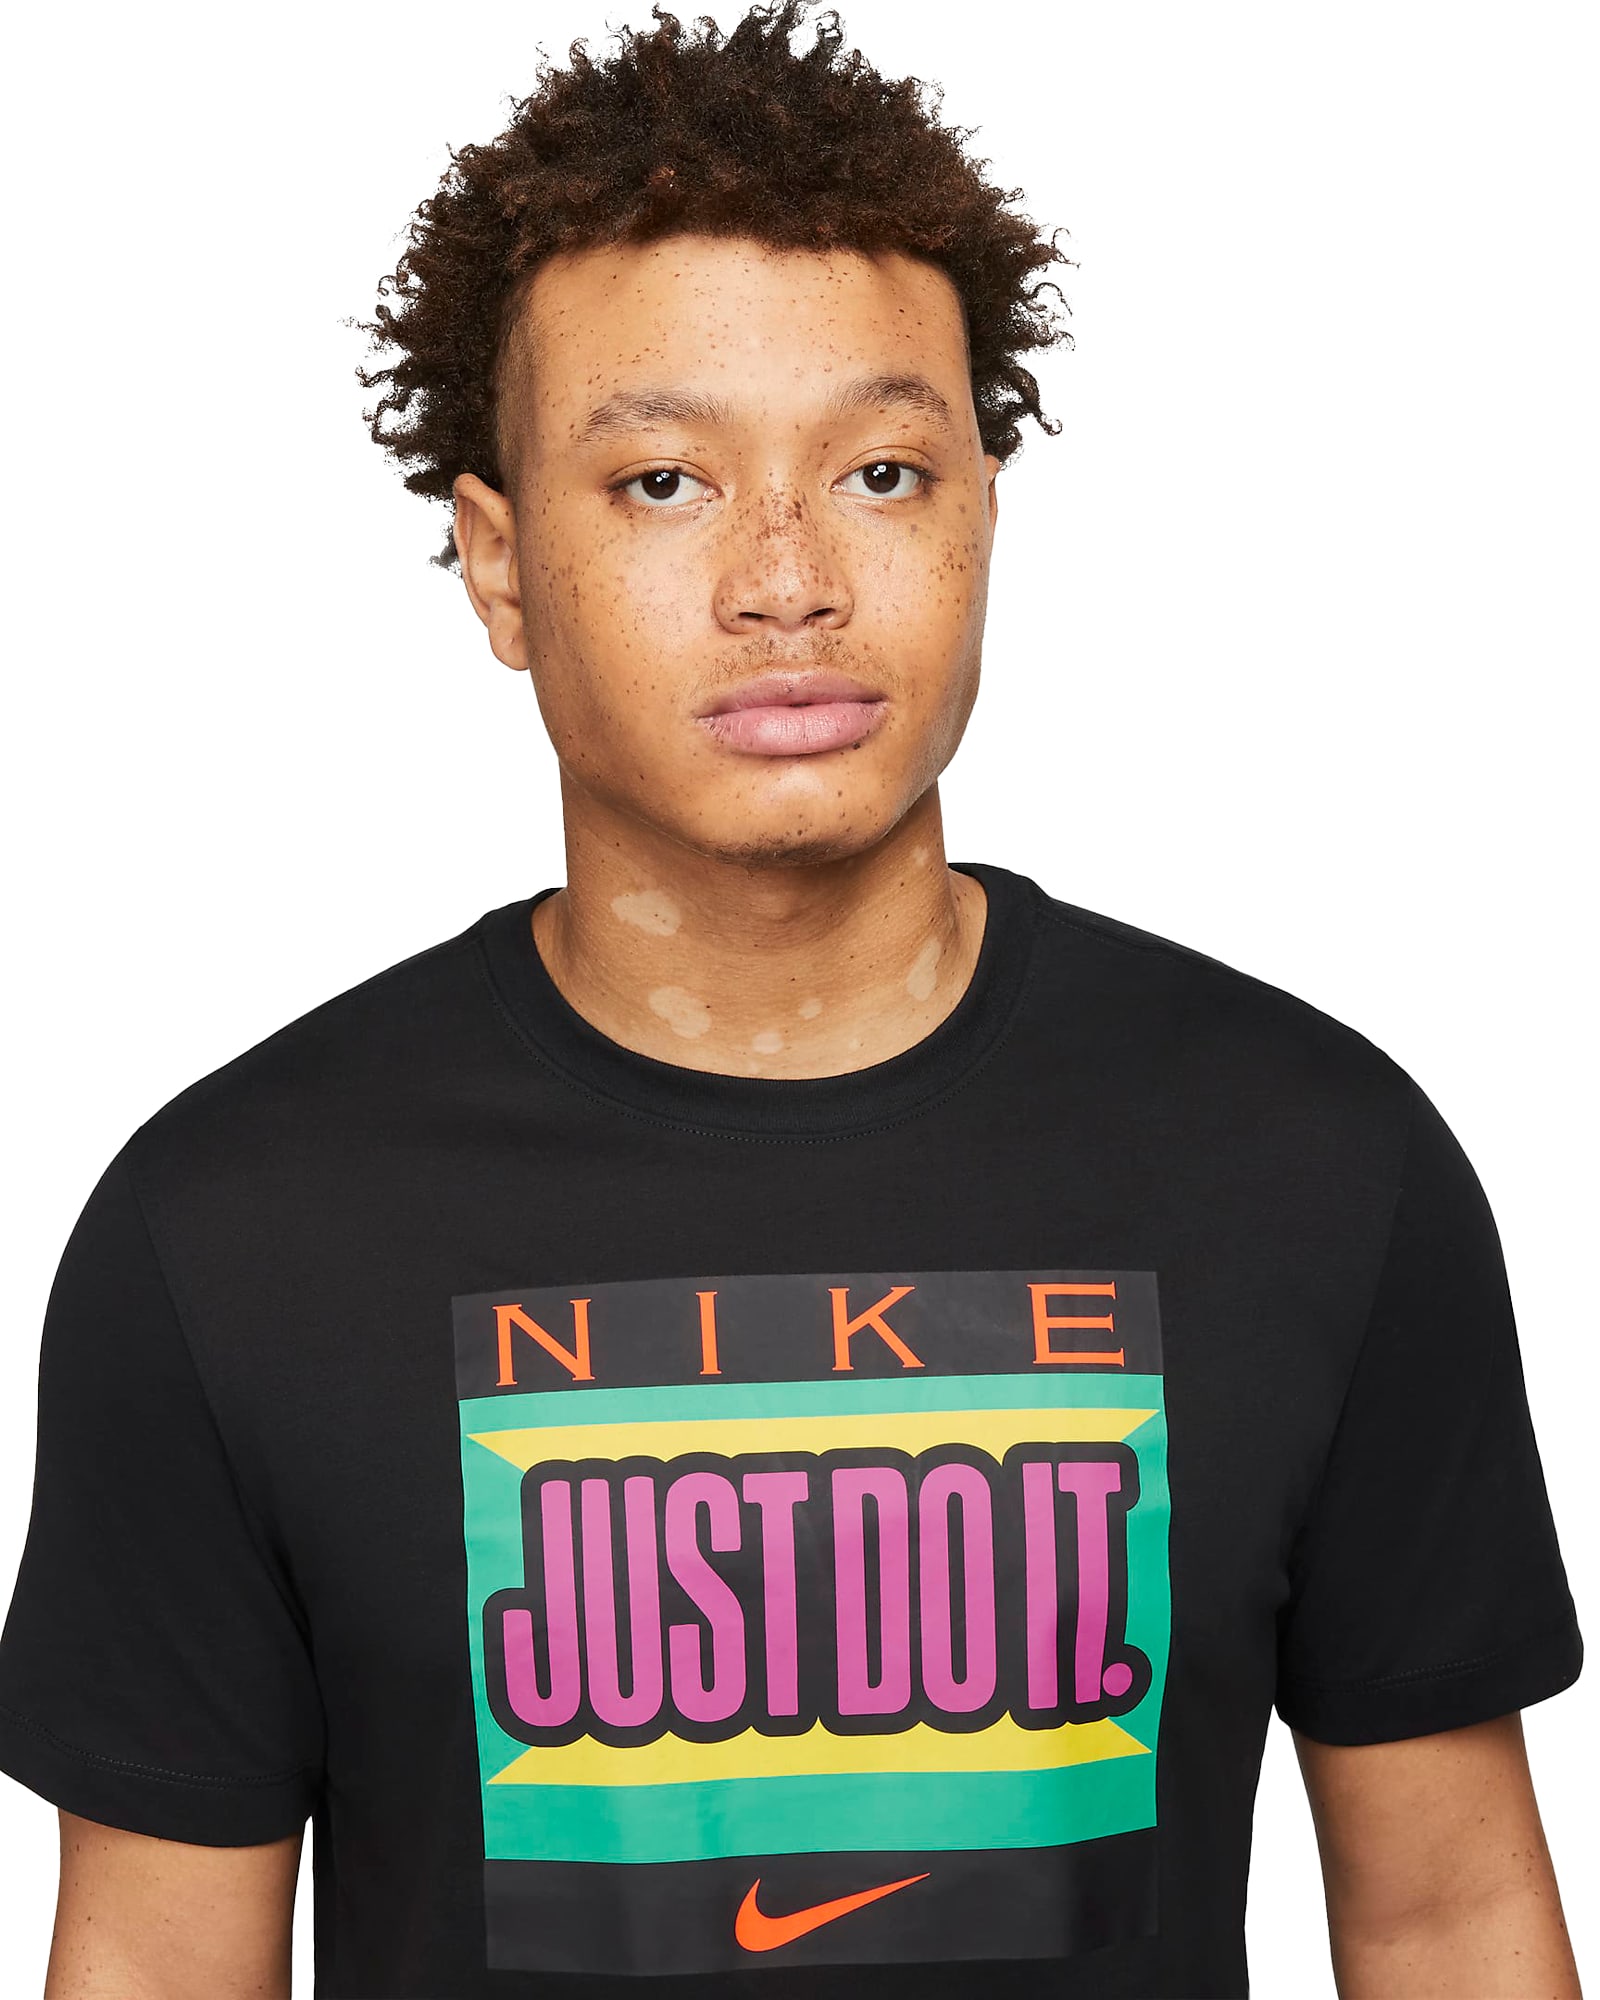 Nike T-Shirt, Nike Just Do It Black Luxury Brand T-Shirt Gift For